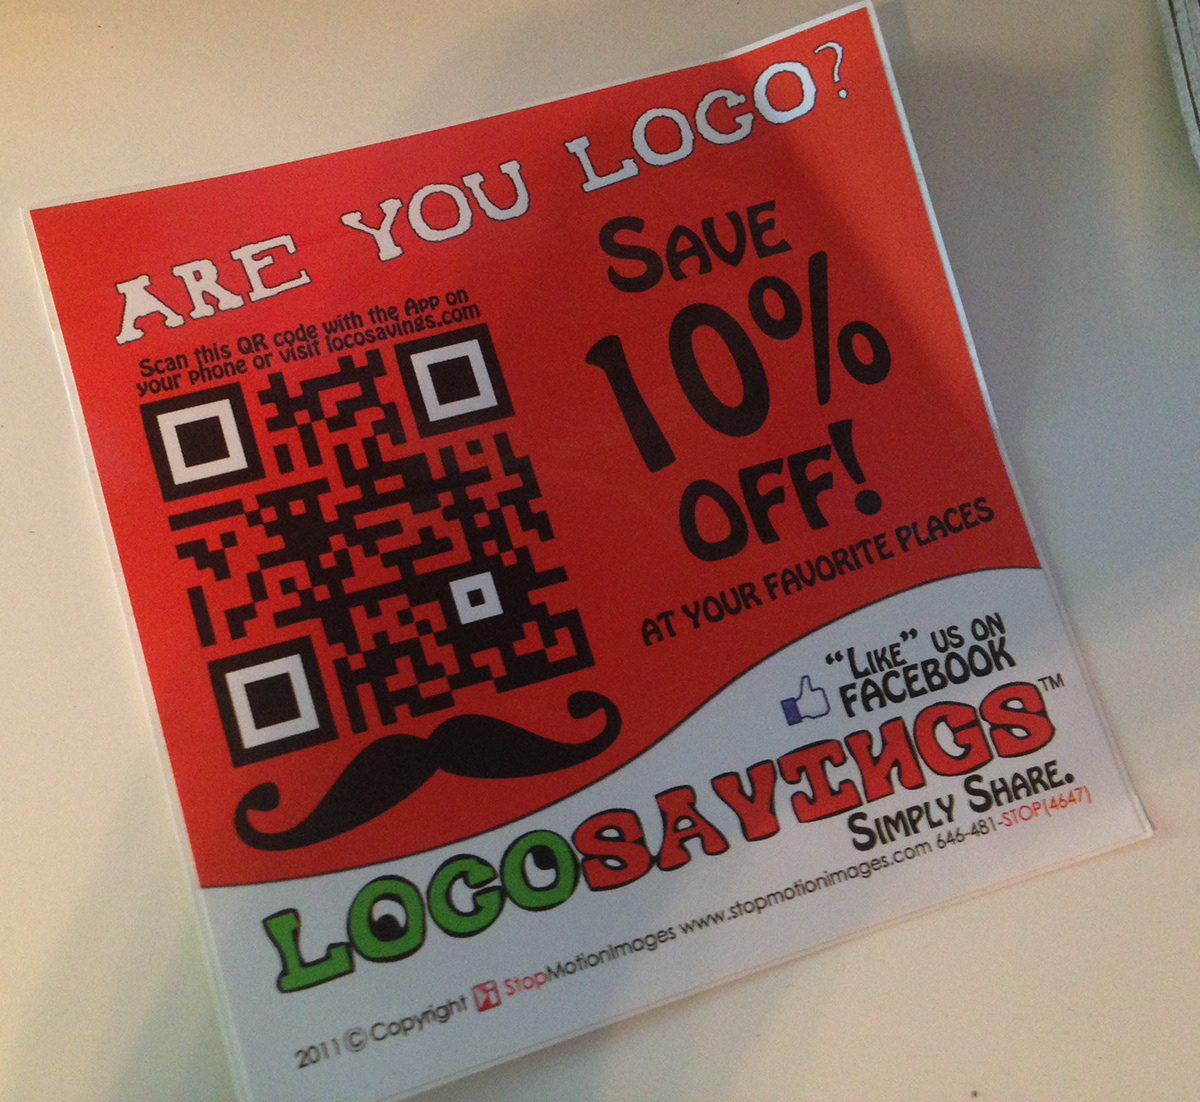 discount card discount COUPON squirrel mustache loco savings plastic card QR Code Shark Week